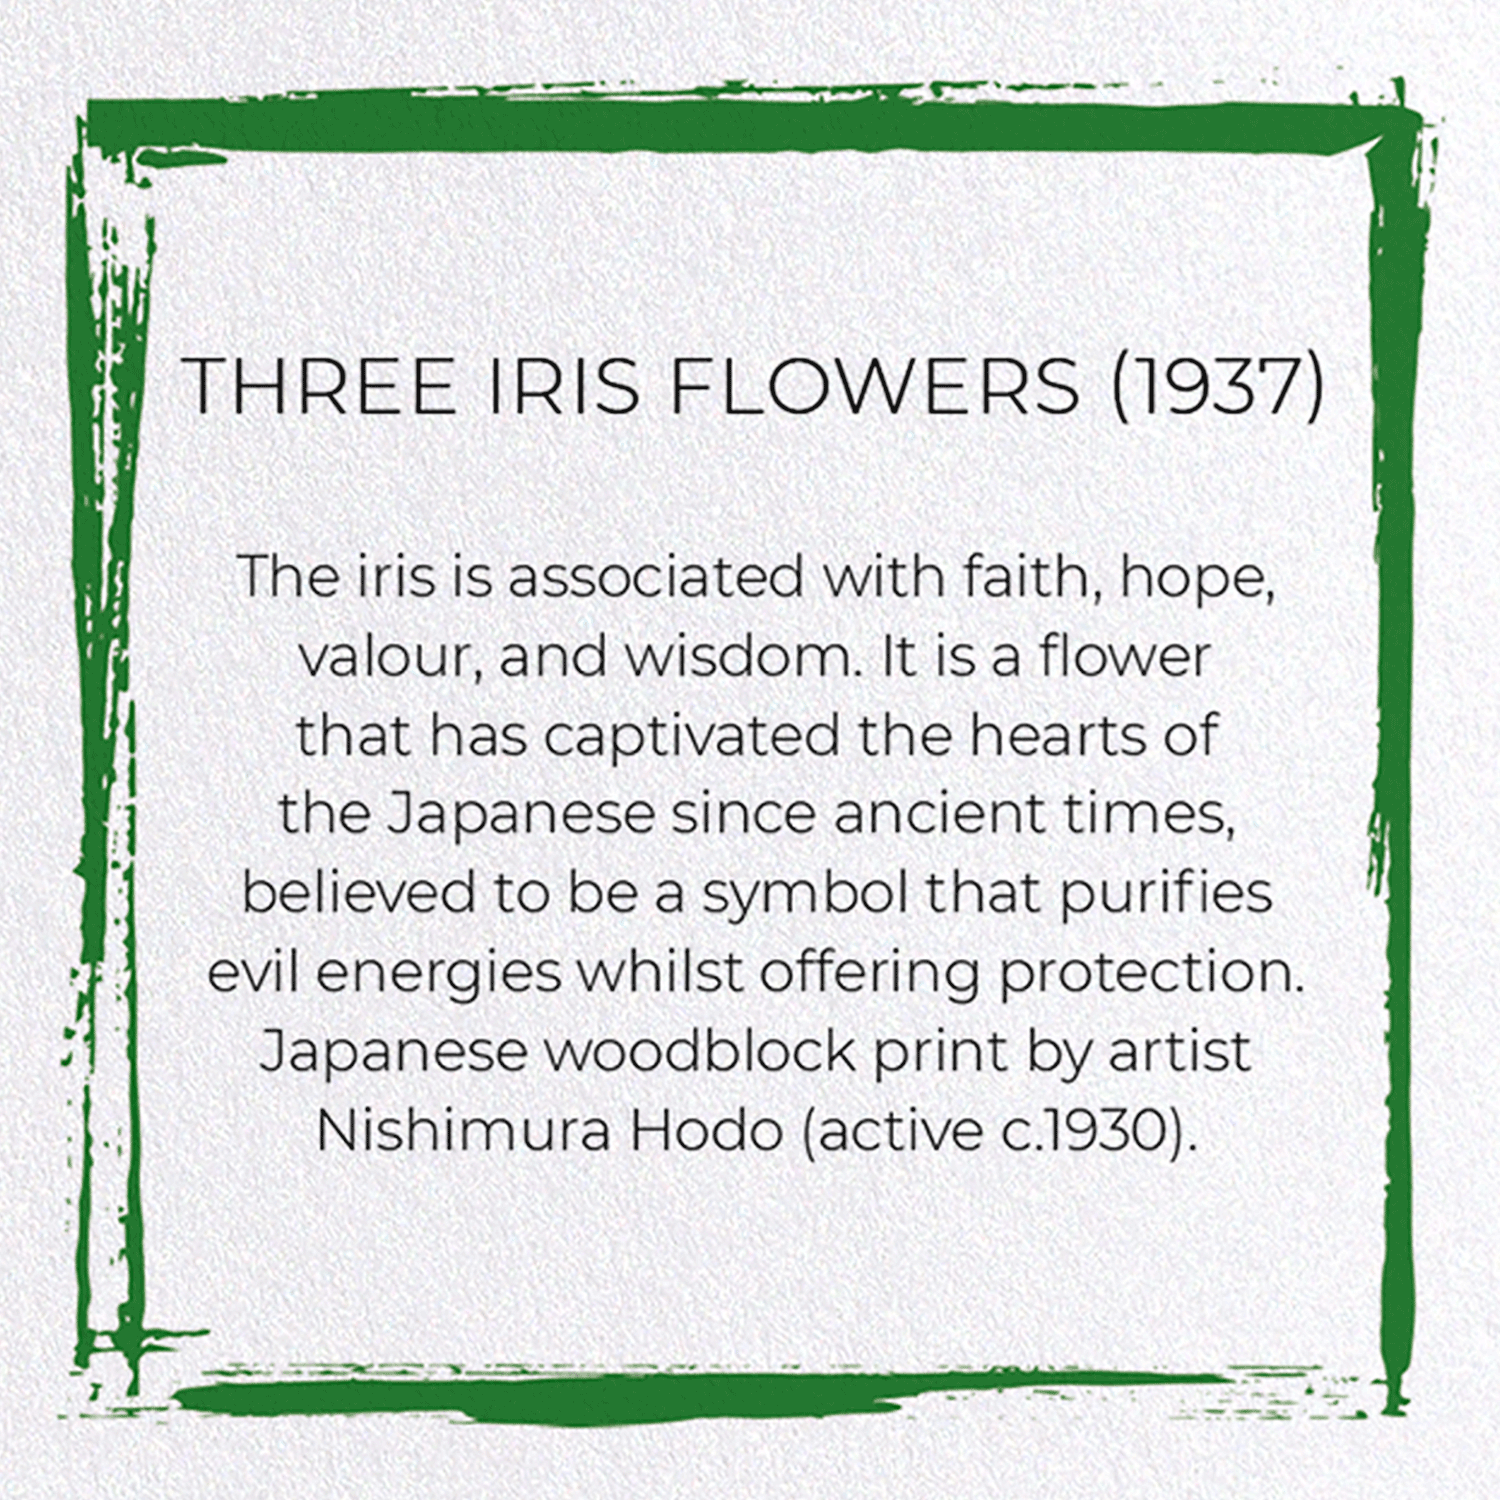 THREE IRIS FLOWERS (1937)